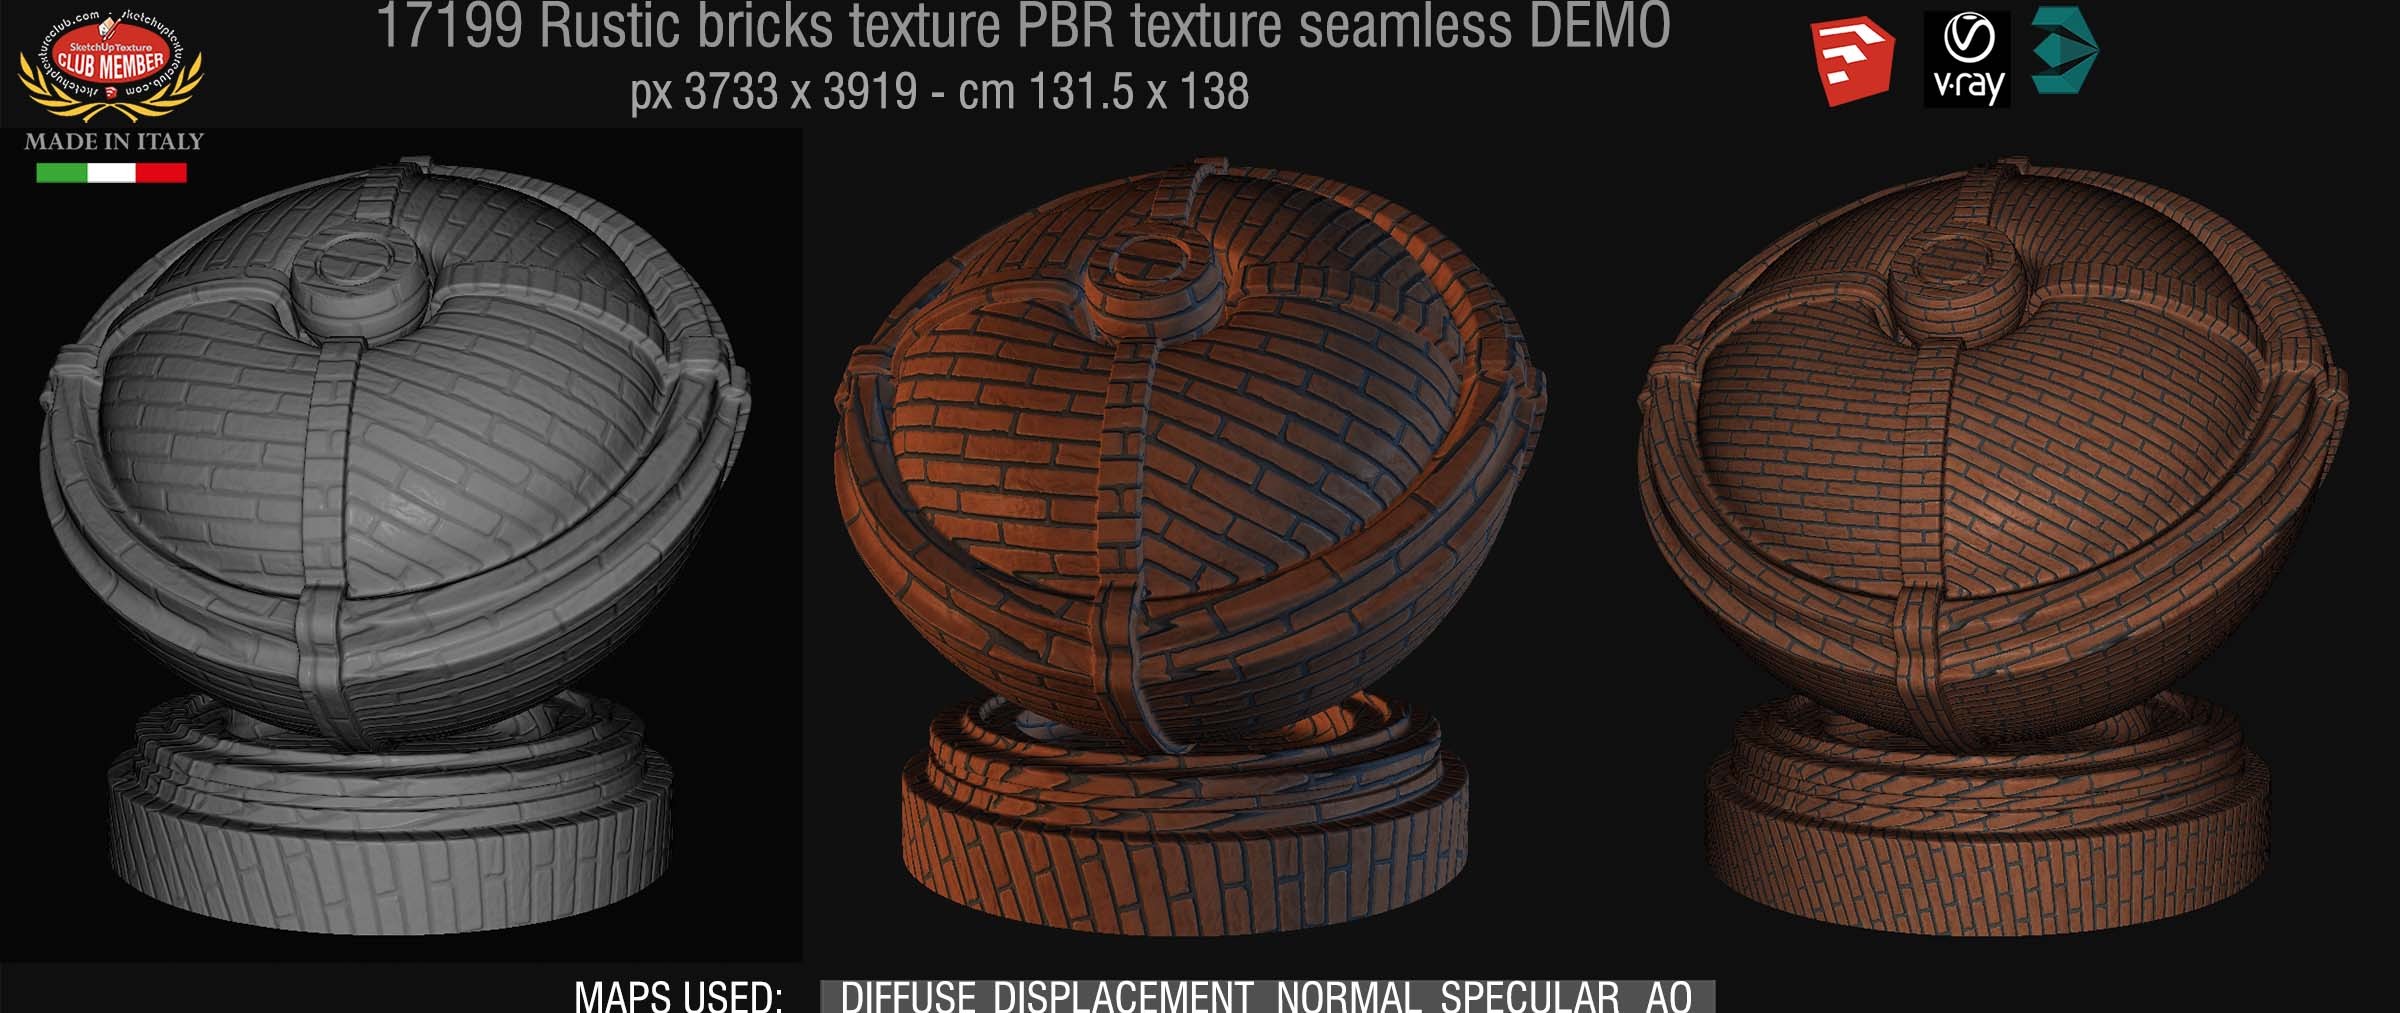 17199 Rustic bricks PBR texture seamless DEMO